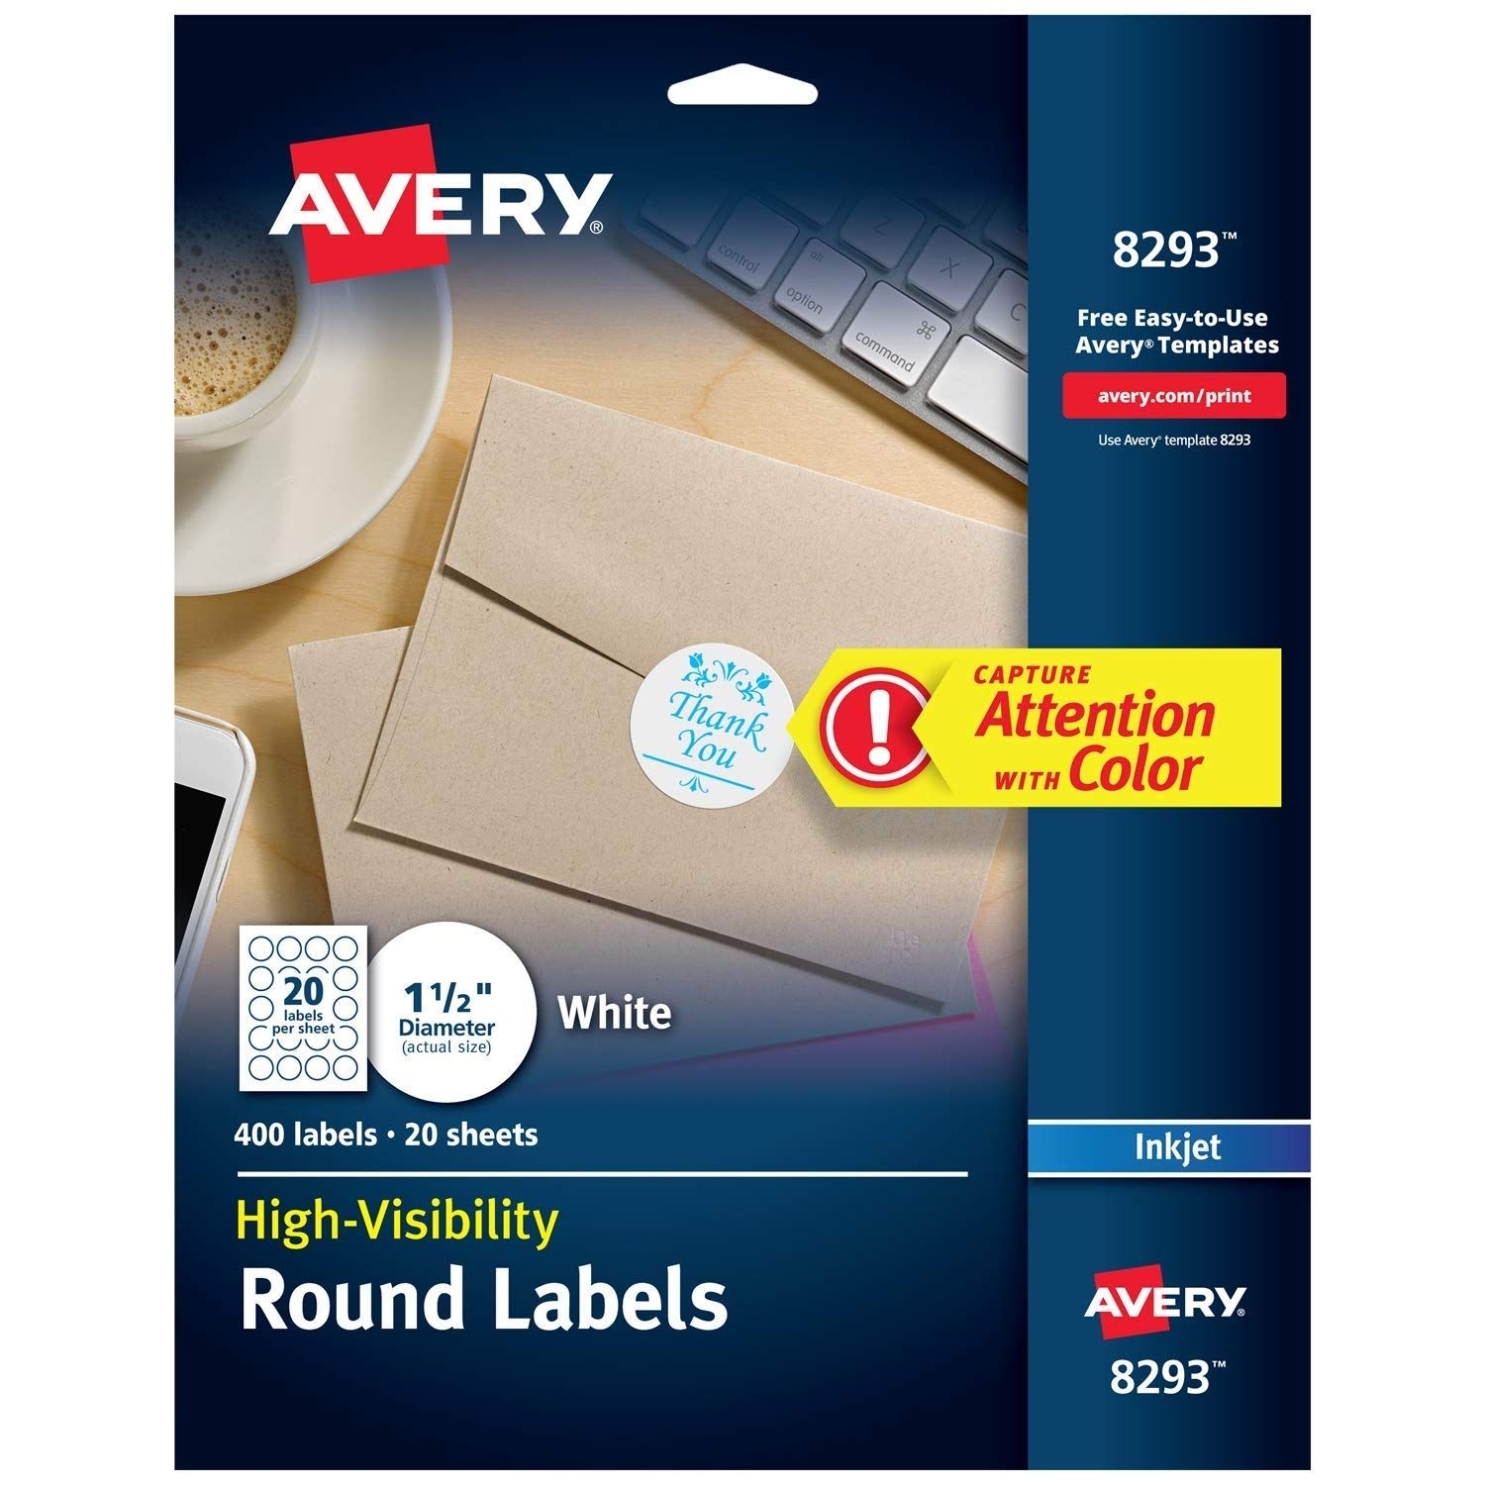 Avery 80 Labels Per Sheet Template Inside 80 Labels Per Sheet Template